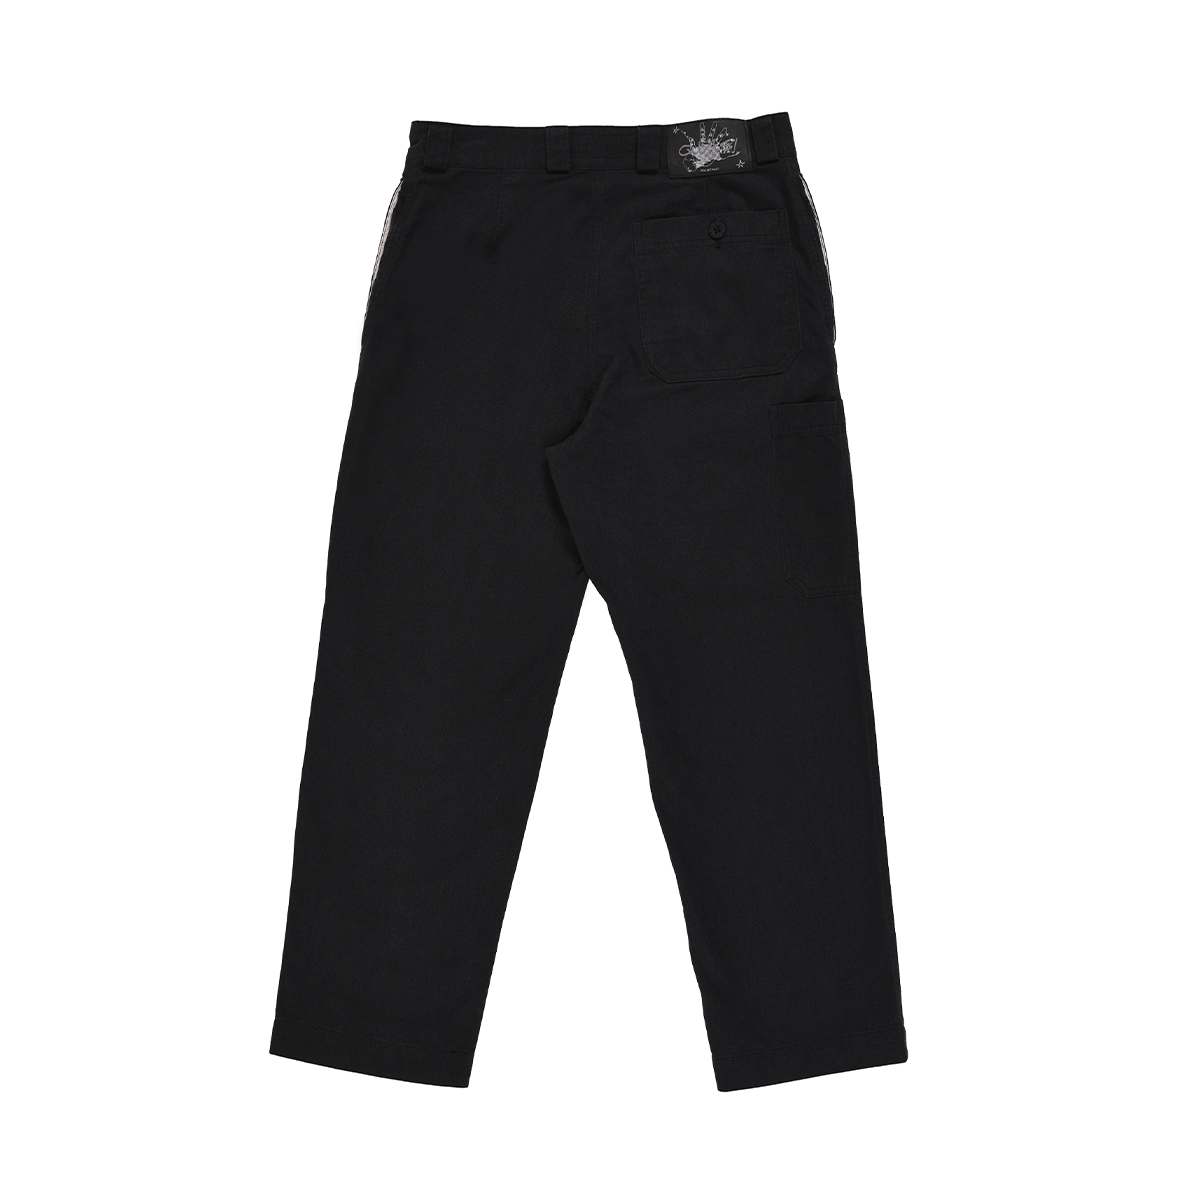 Quasi Pocket Pants - Washed Black